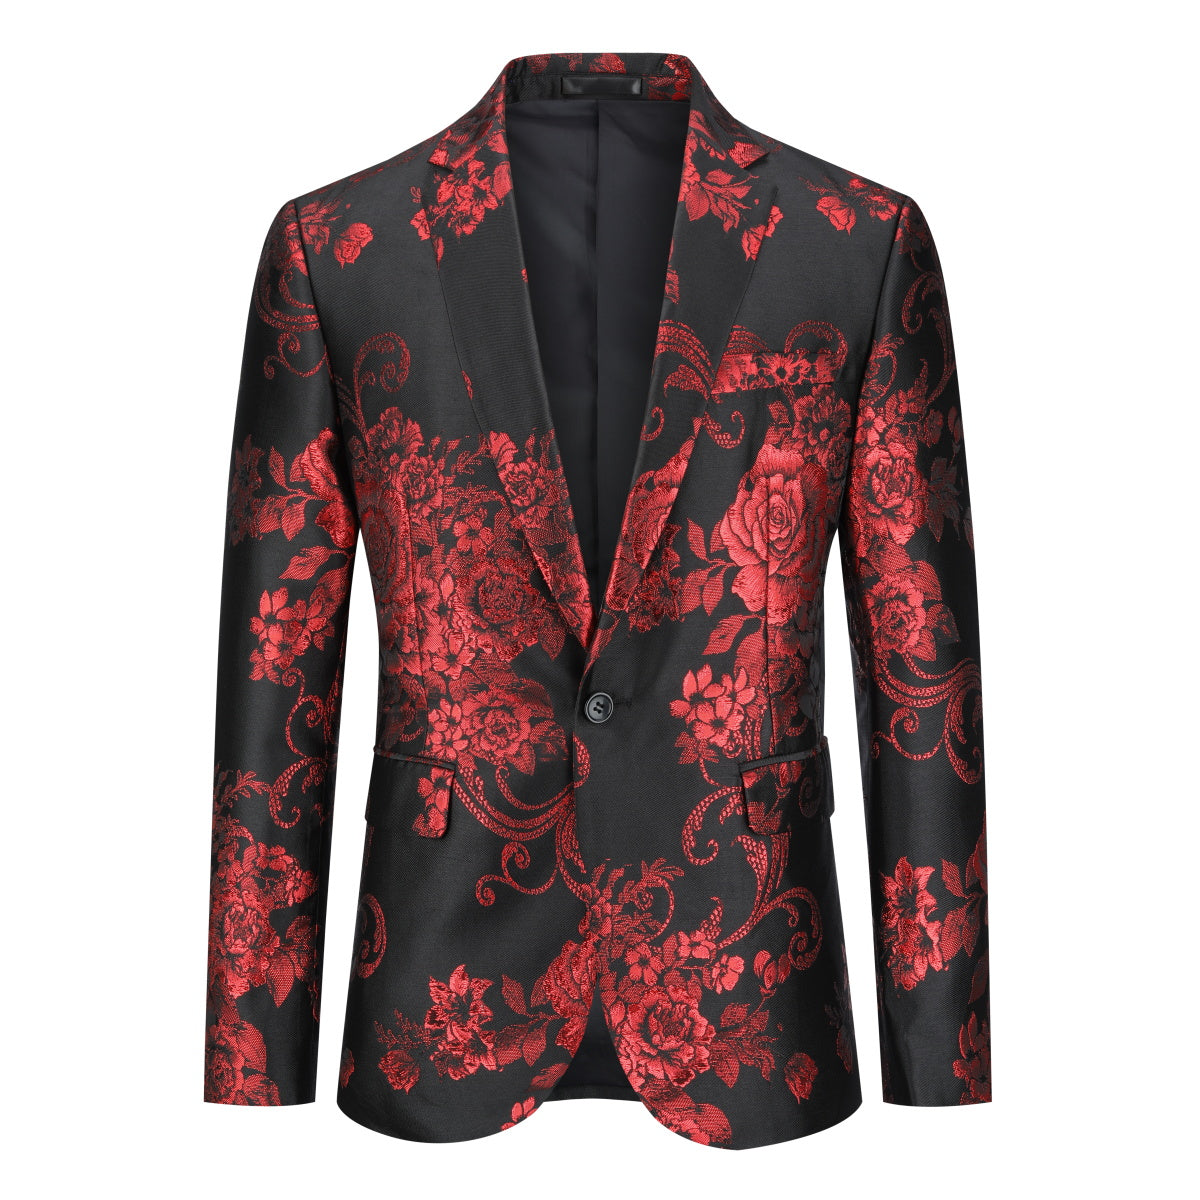 Men's Floral Suit Jacket Printed Blazer Red